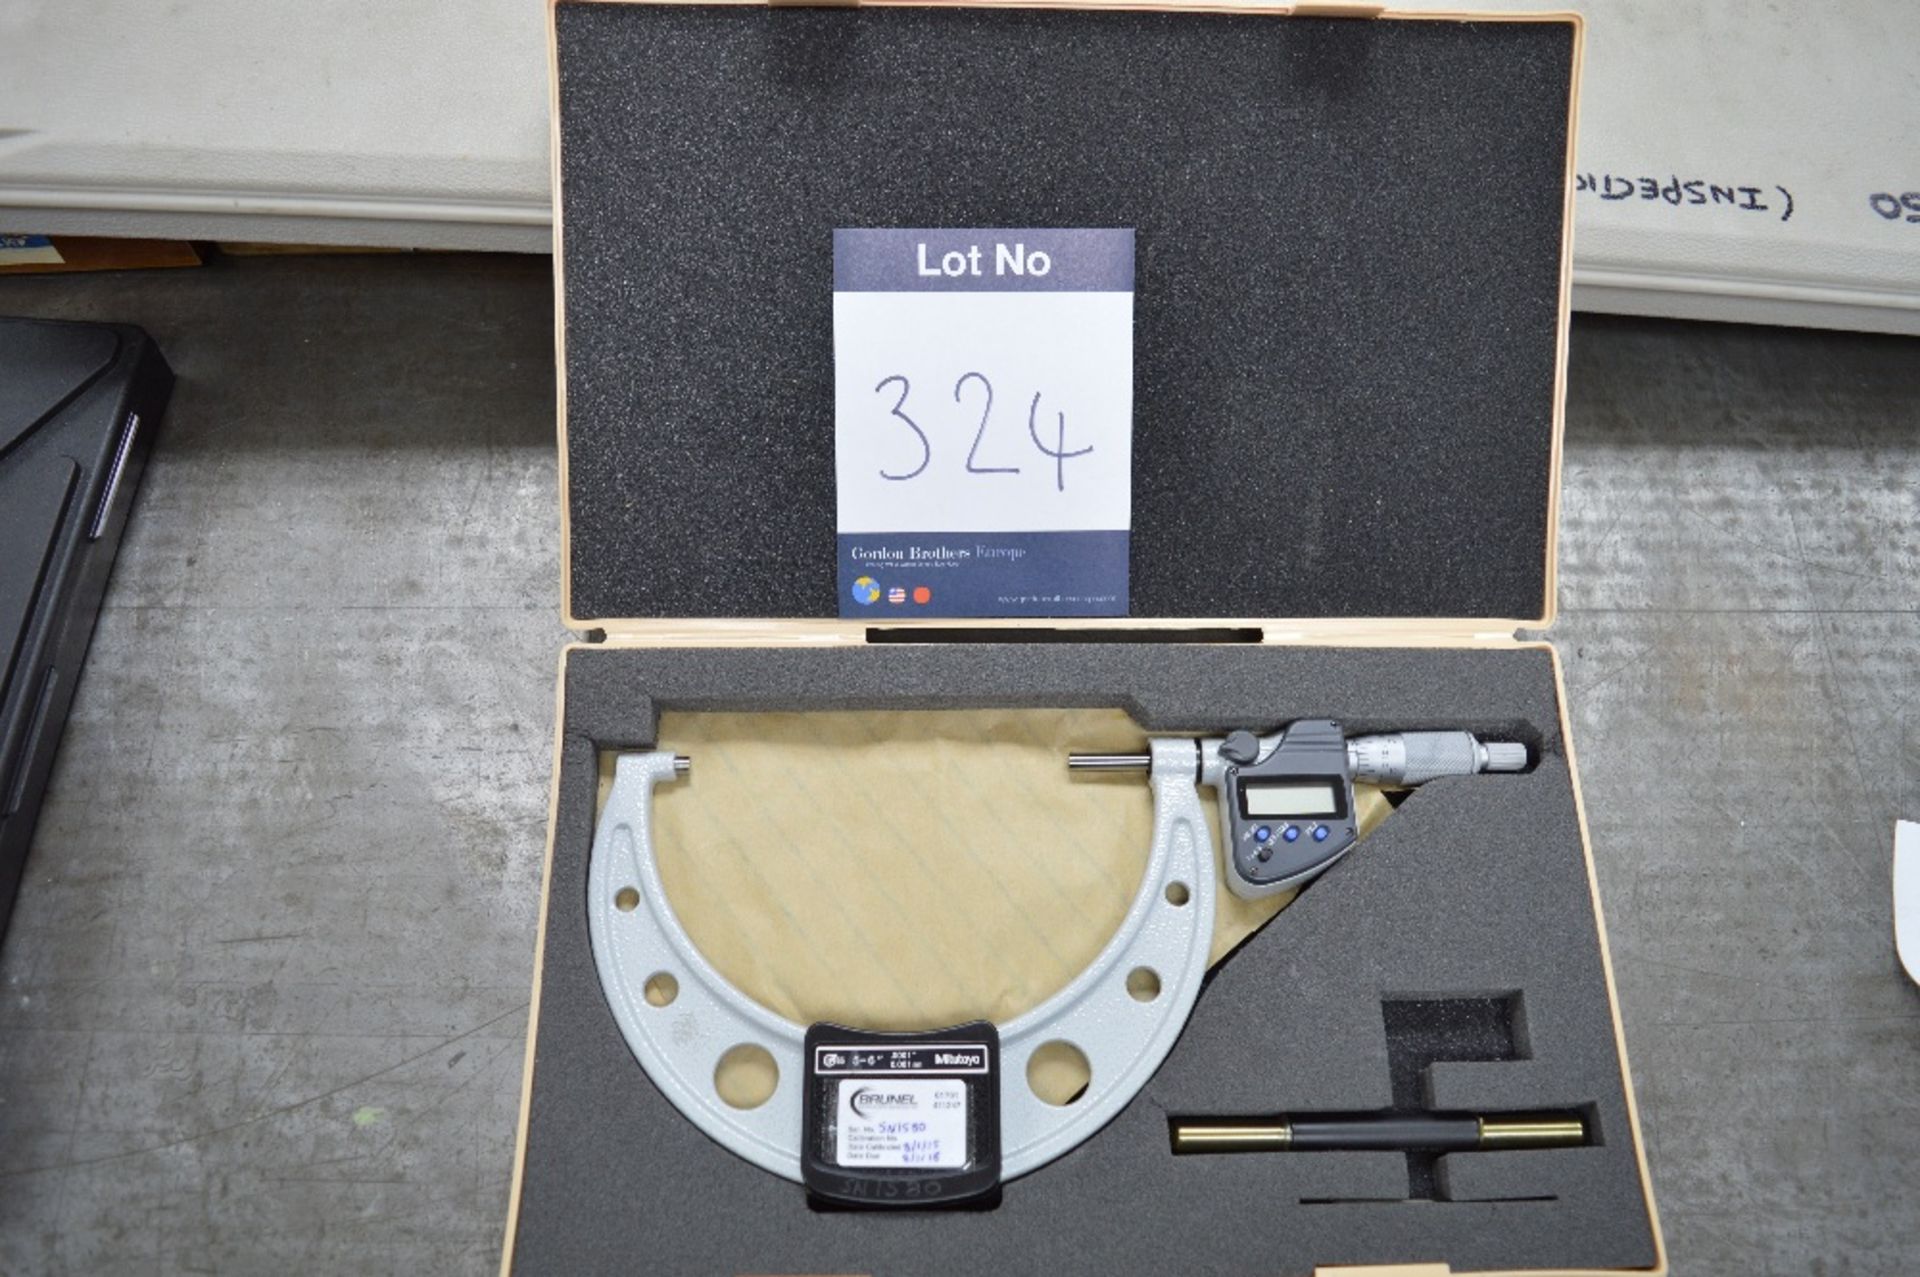 Mitutoyo 5-6" Digital Micrometer
Serial Number: SN